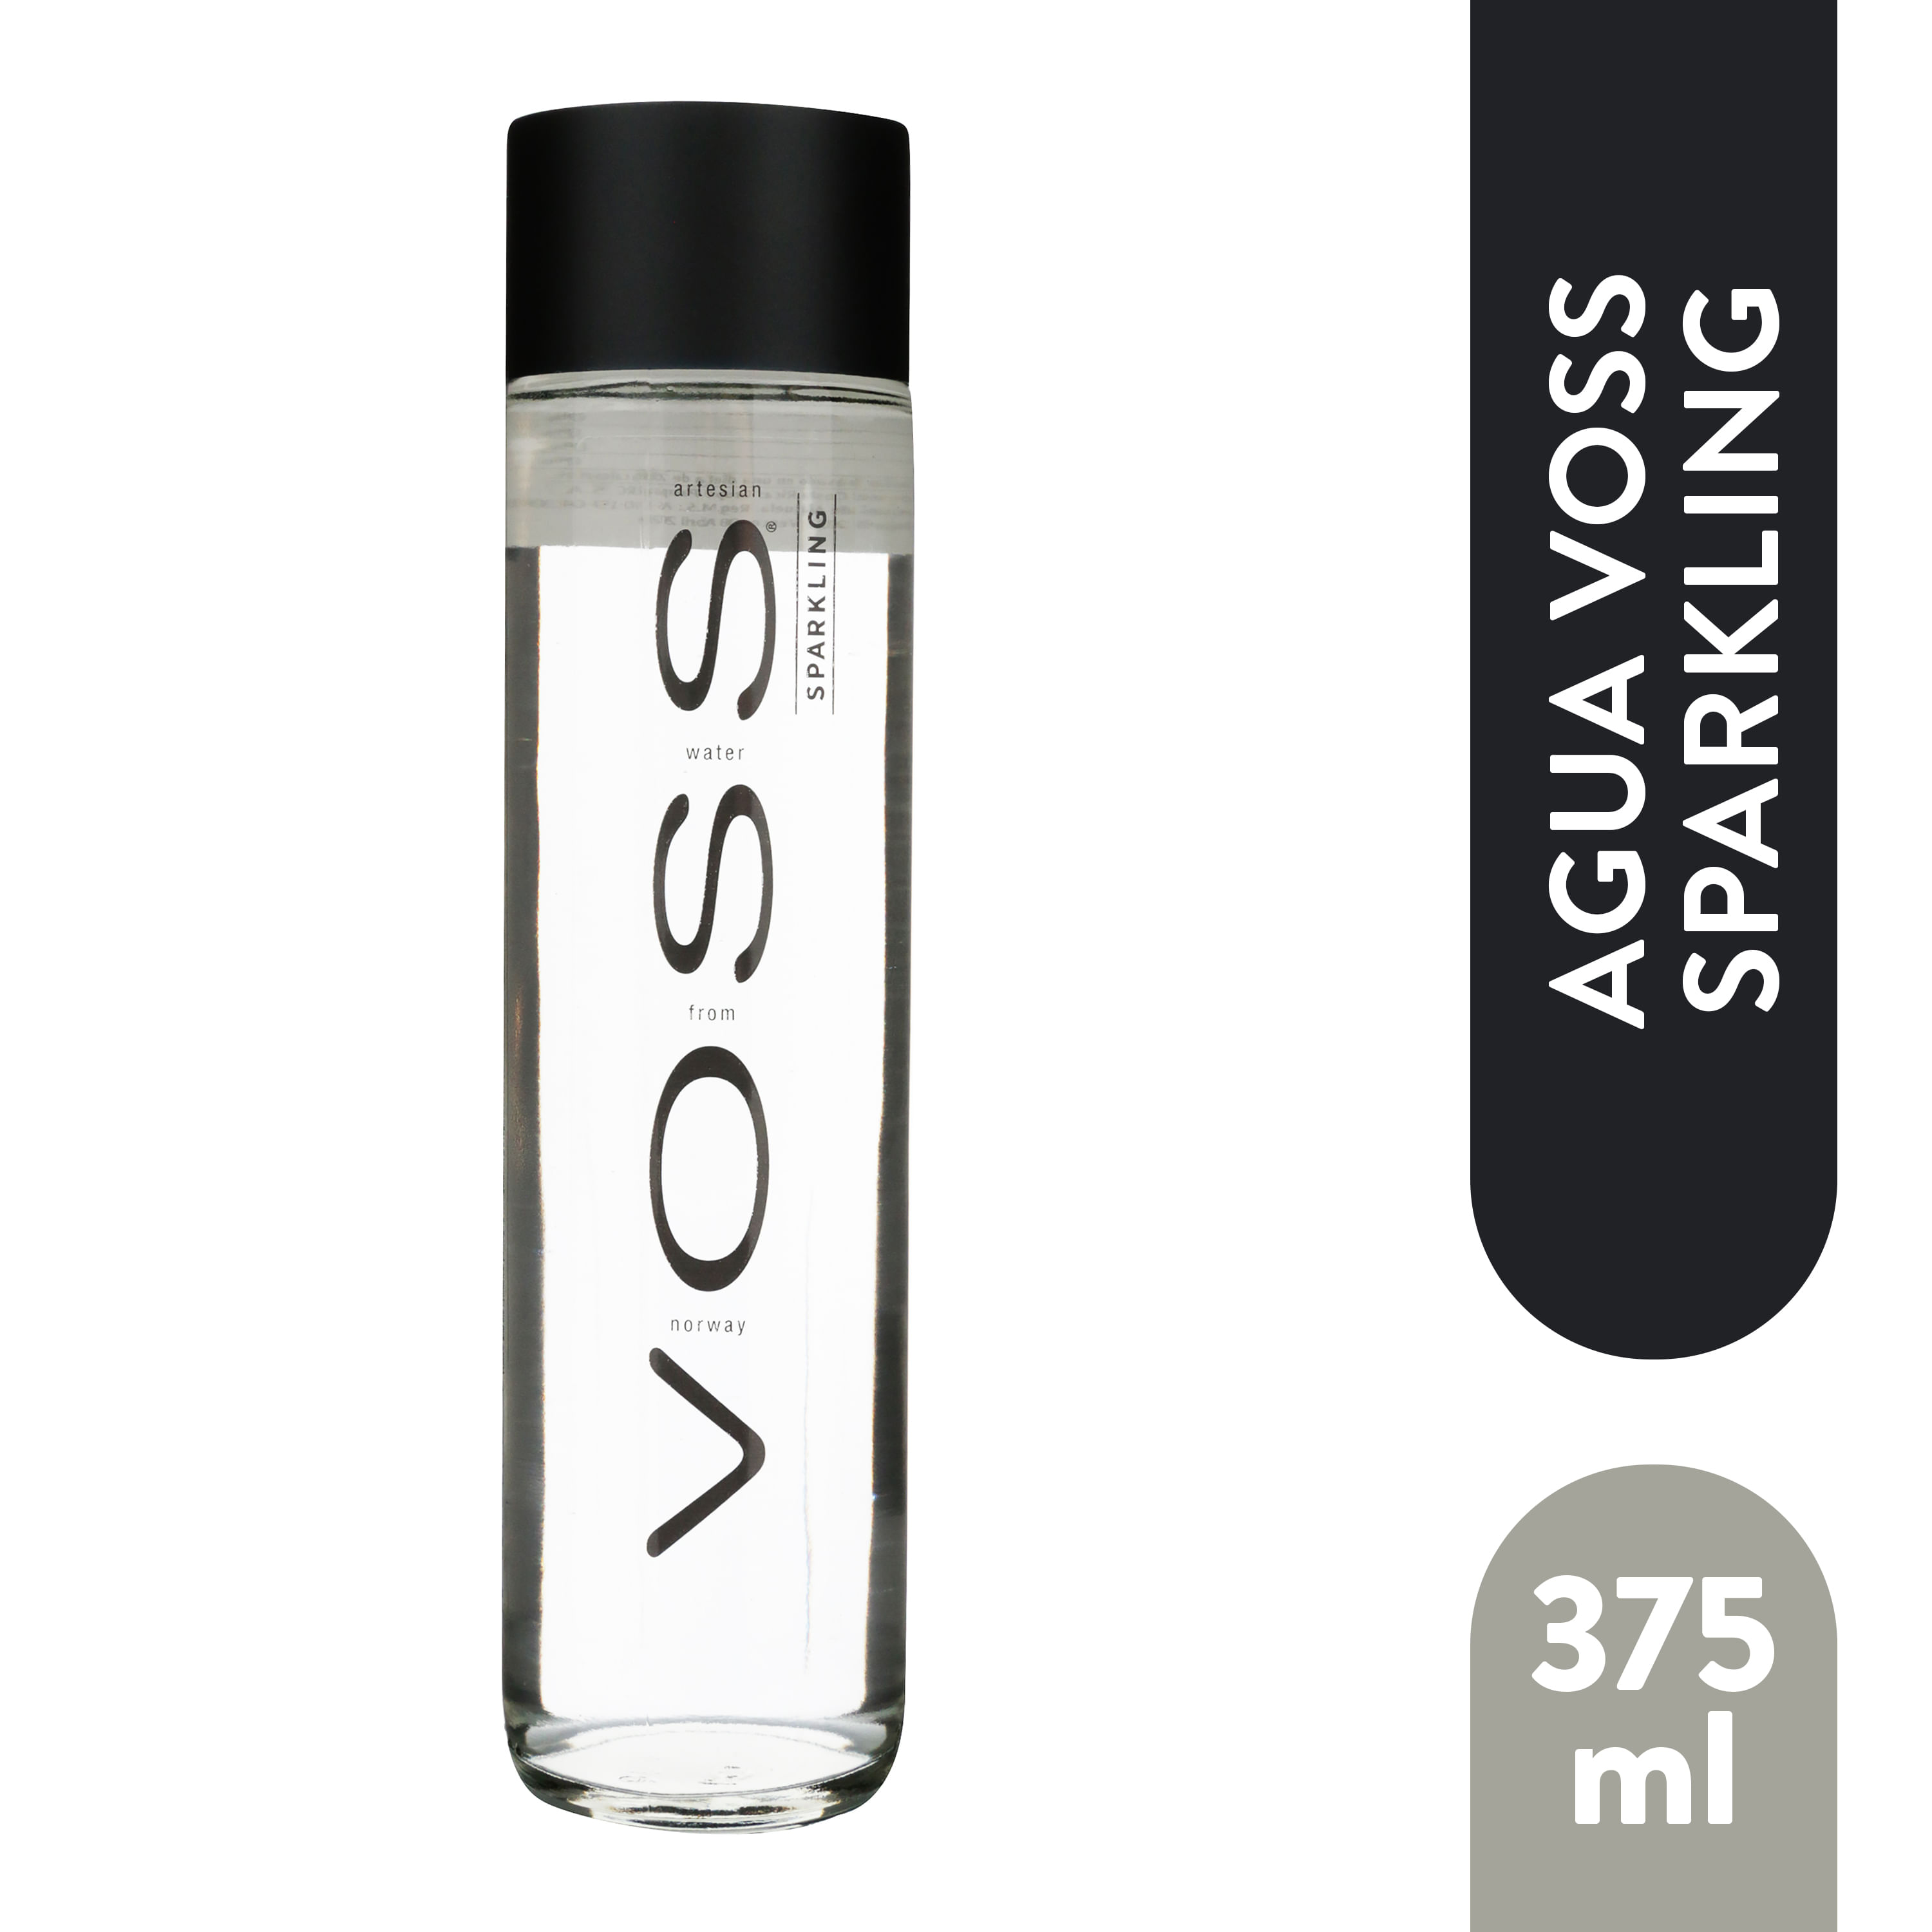 Agua Voss 375 ml - Los Precios